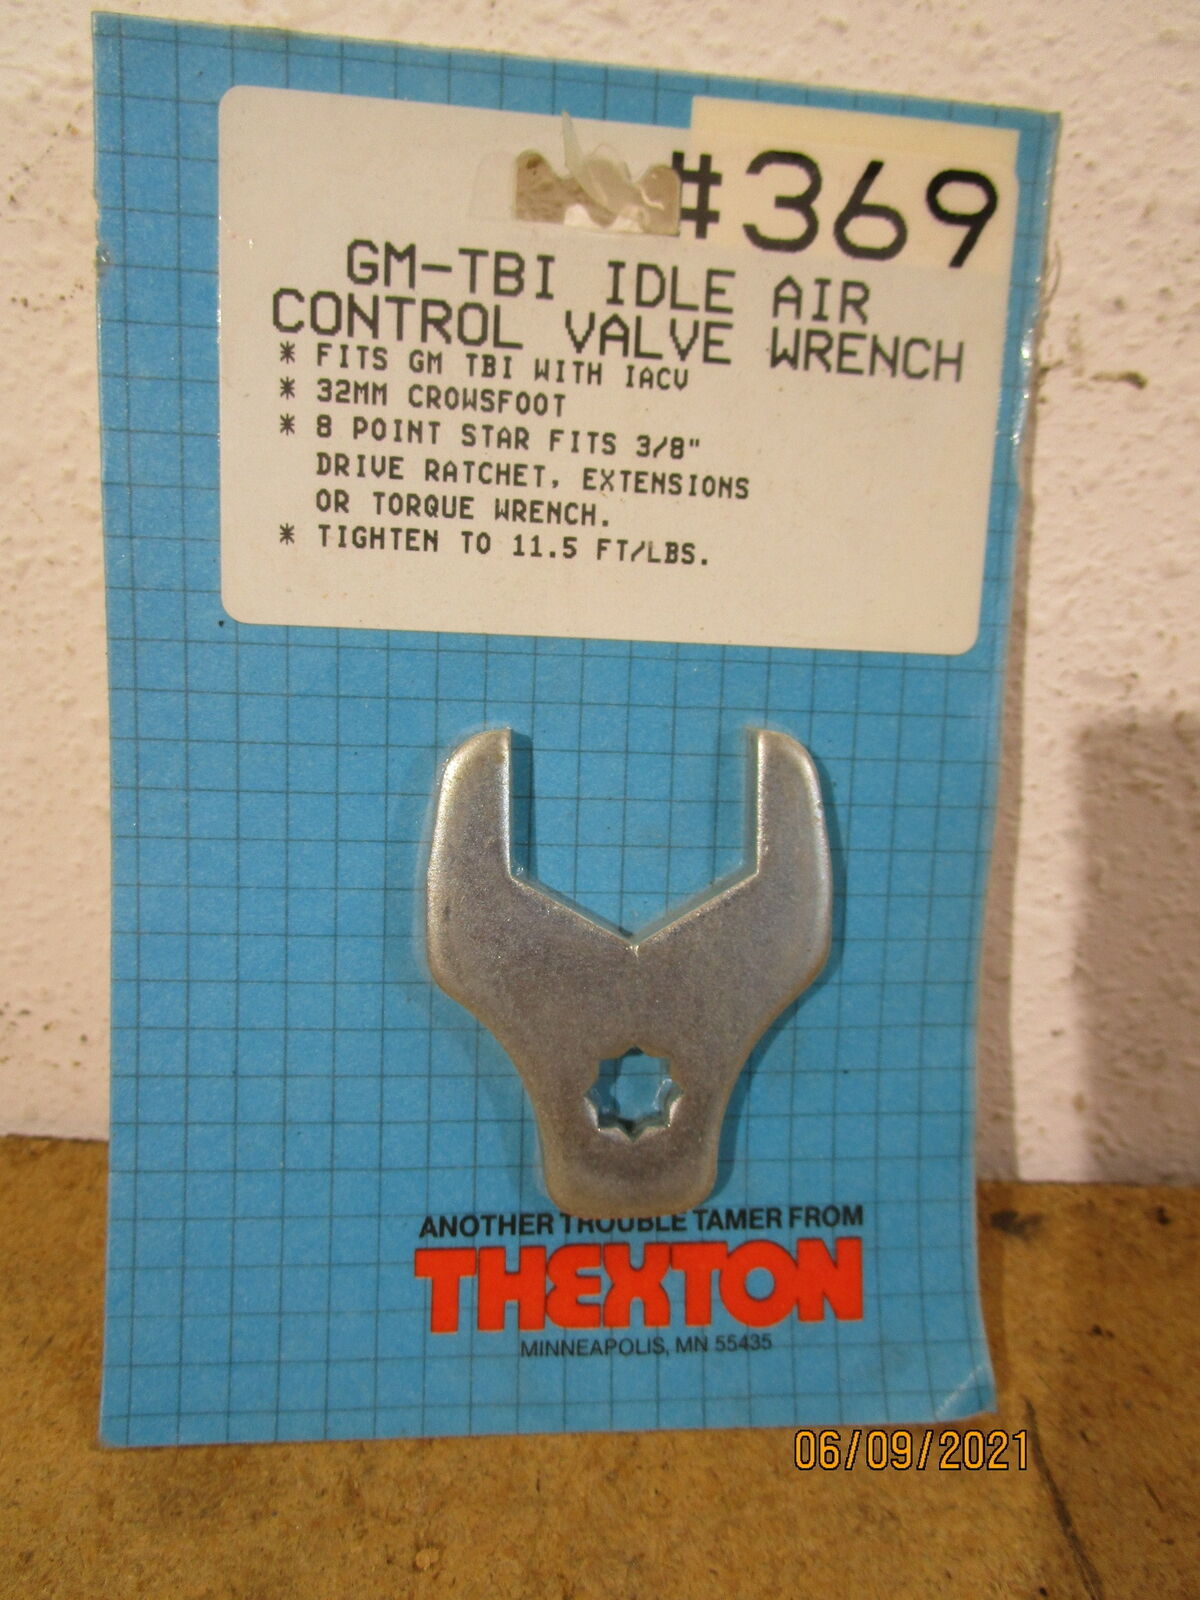 Thexton 369 GM TBI Idle Air Control Valve Wrench NOS